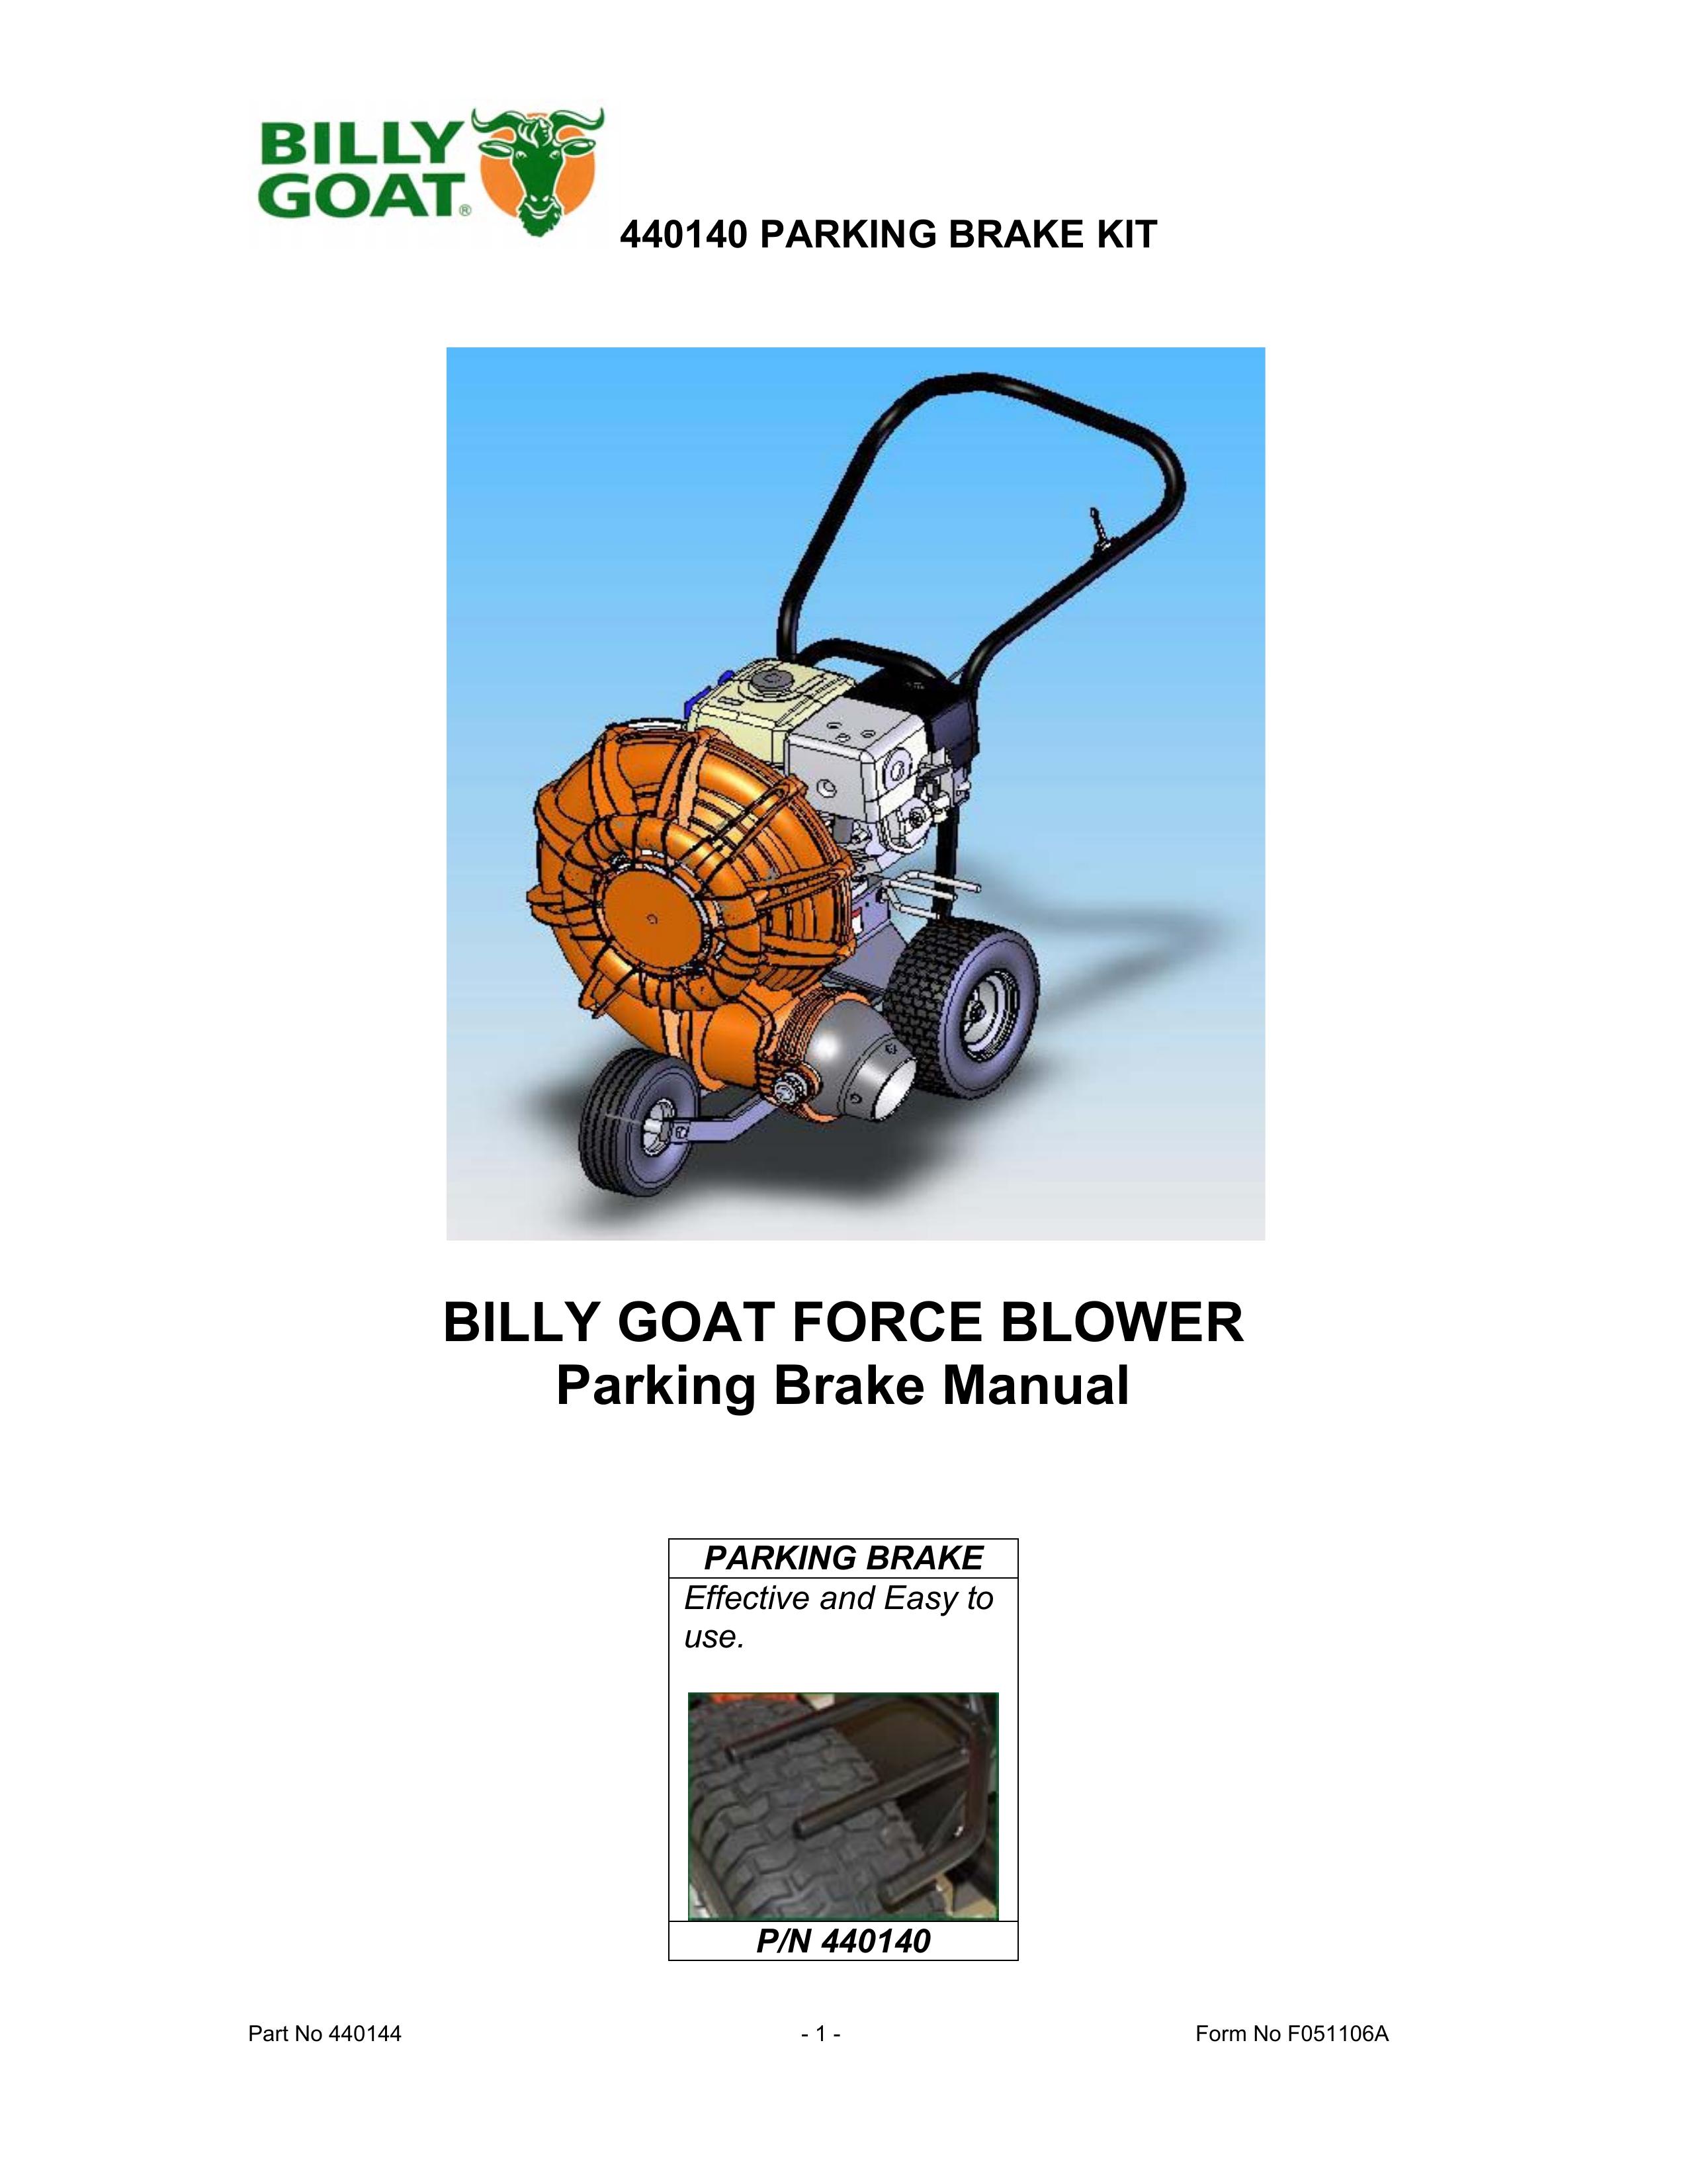 Billy Goat 440140 Blower User Manual